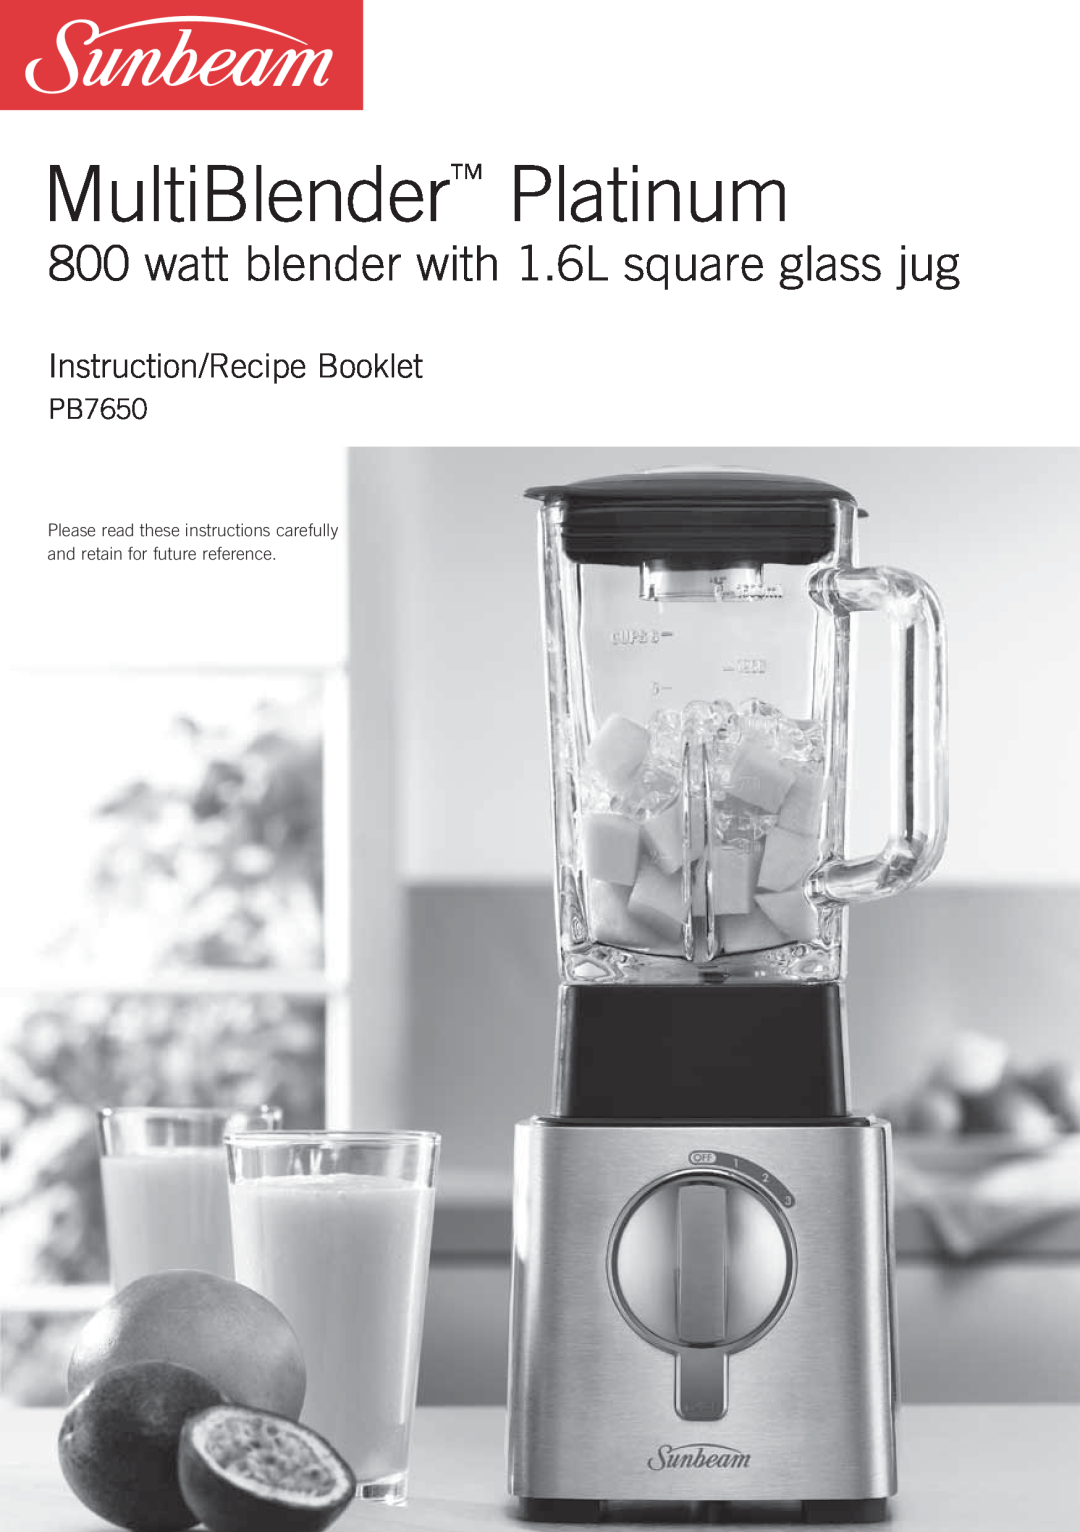 Sunbeam PB7650 manual MultiBlender Platinum, watt blender with 1.6L square glass jug, Instruction/Recipe Booklet 